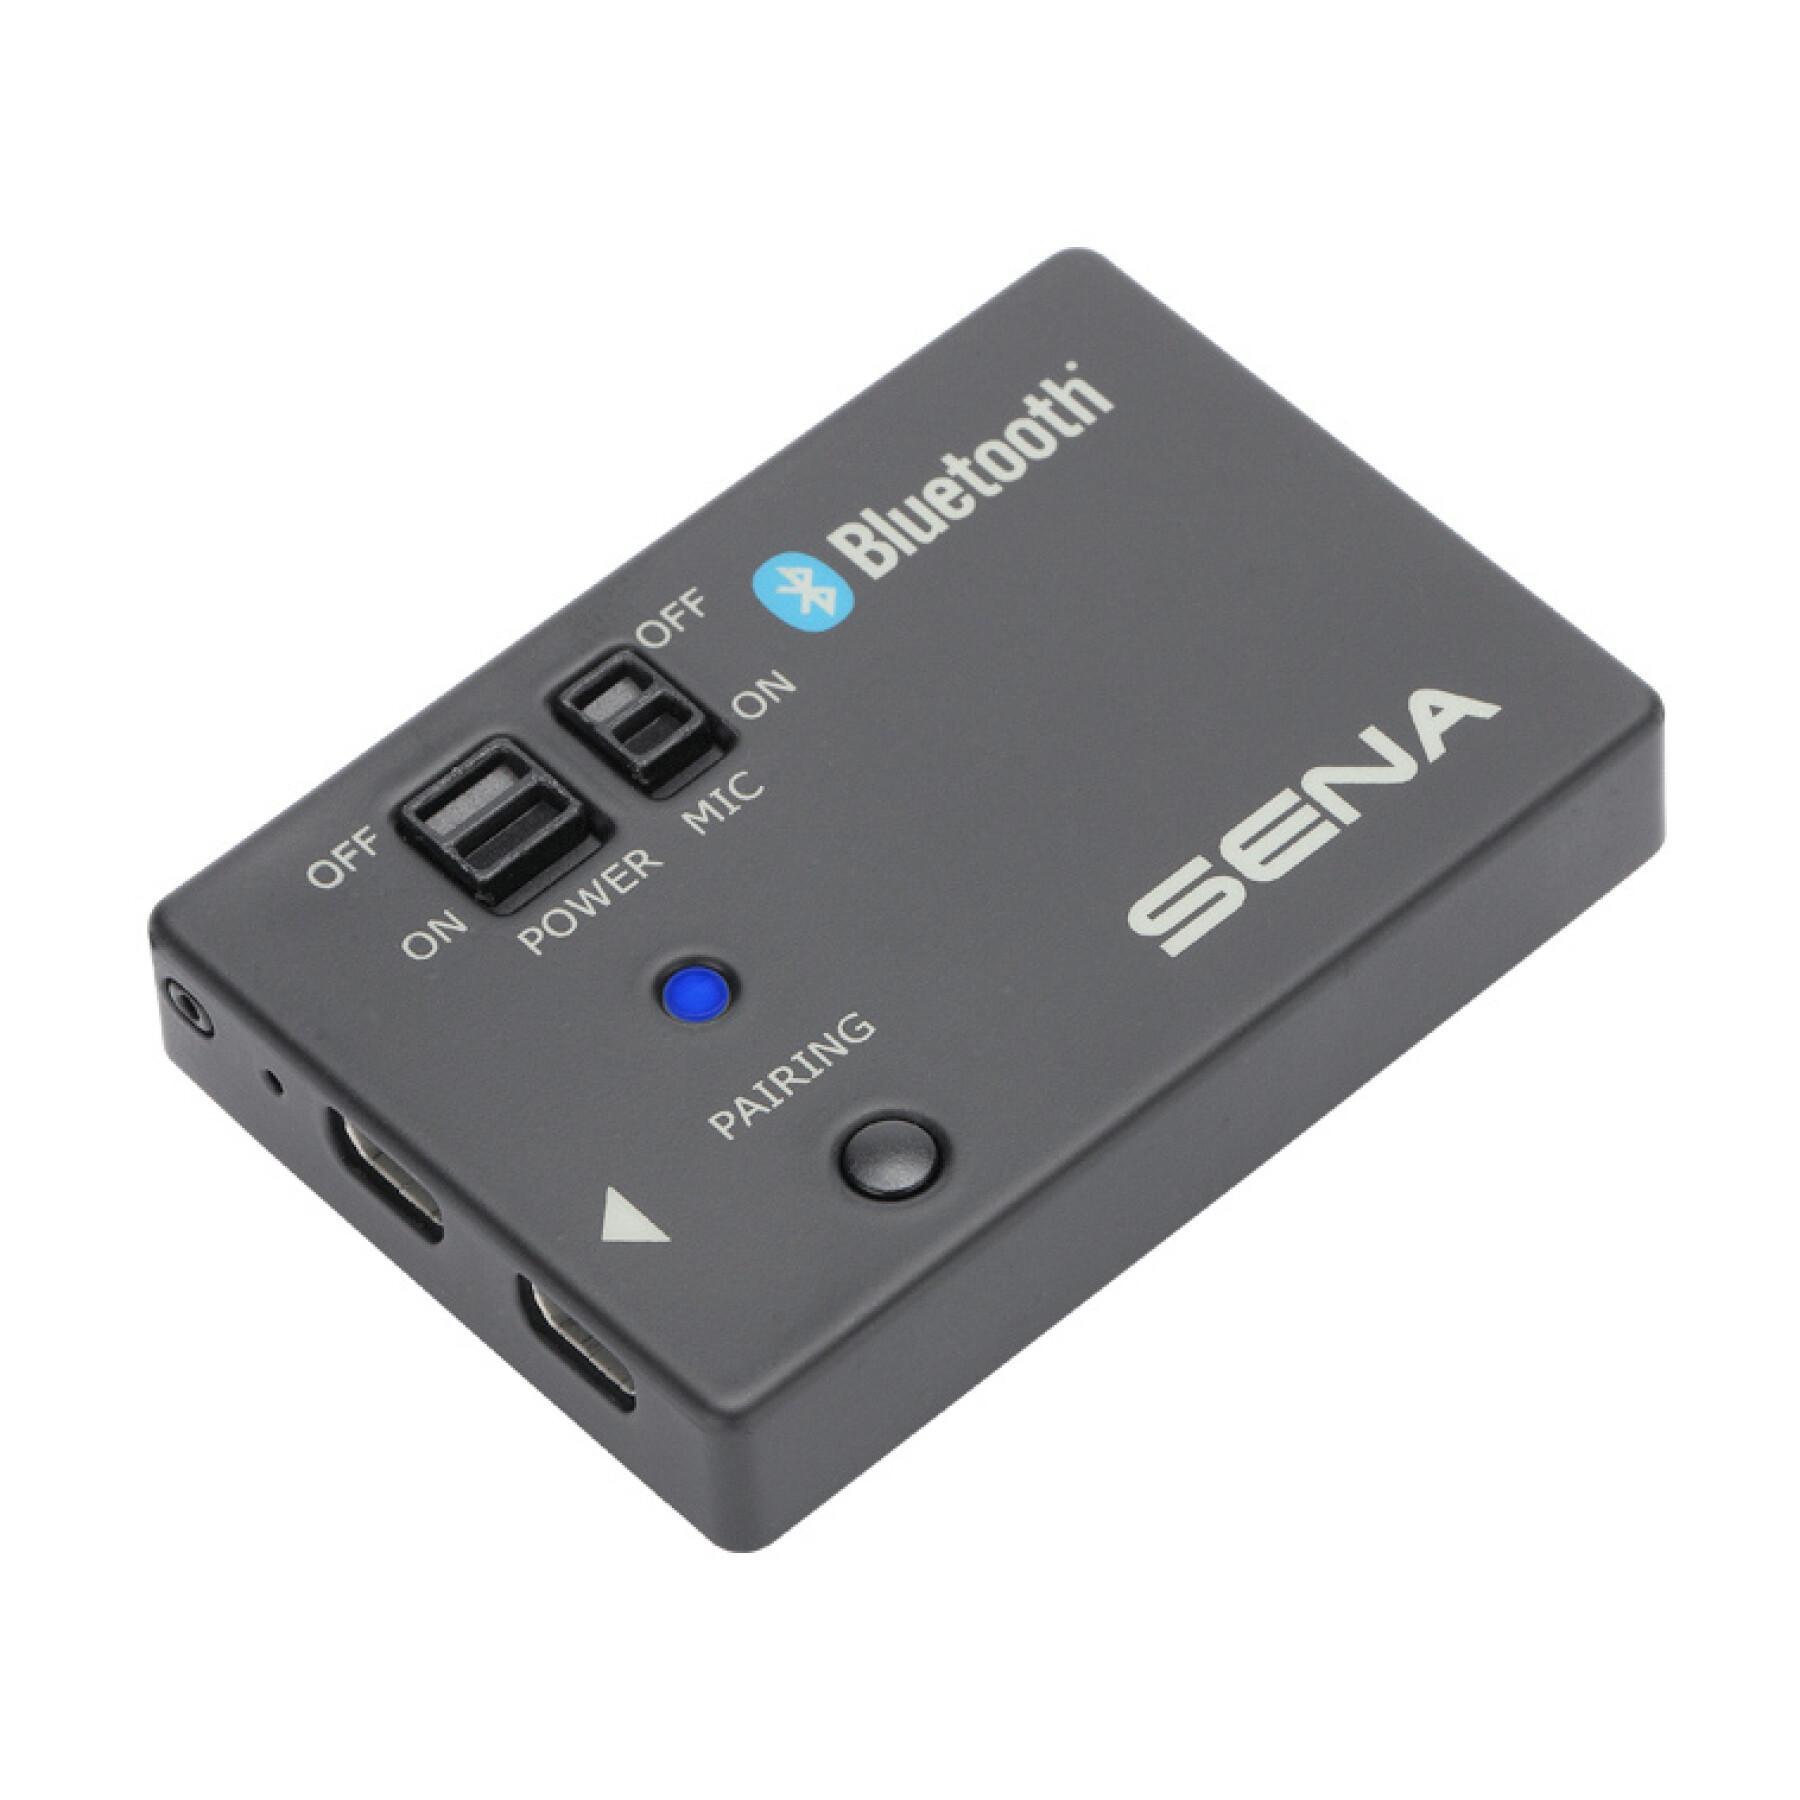 Pack de audio Bluetooth para gopro Sena